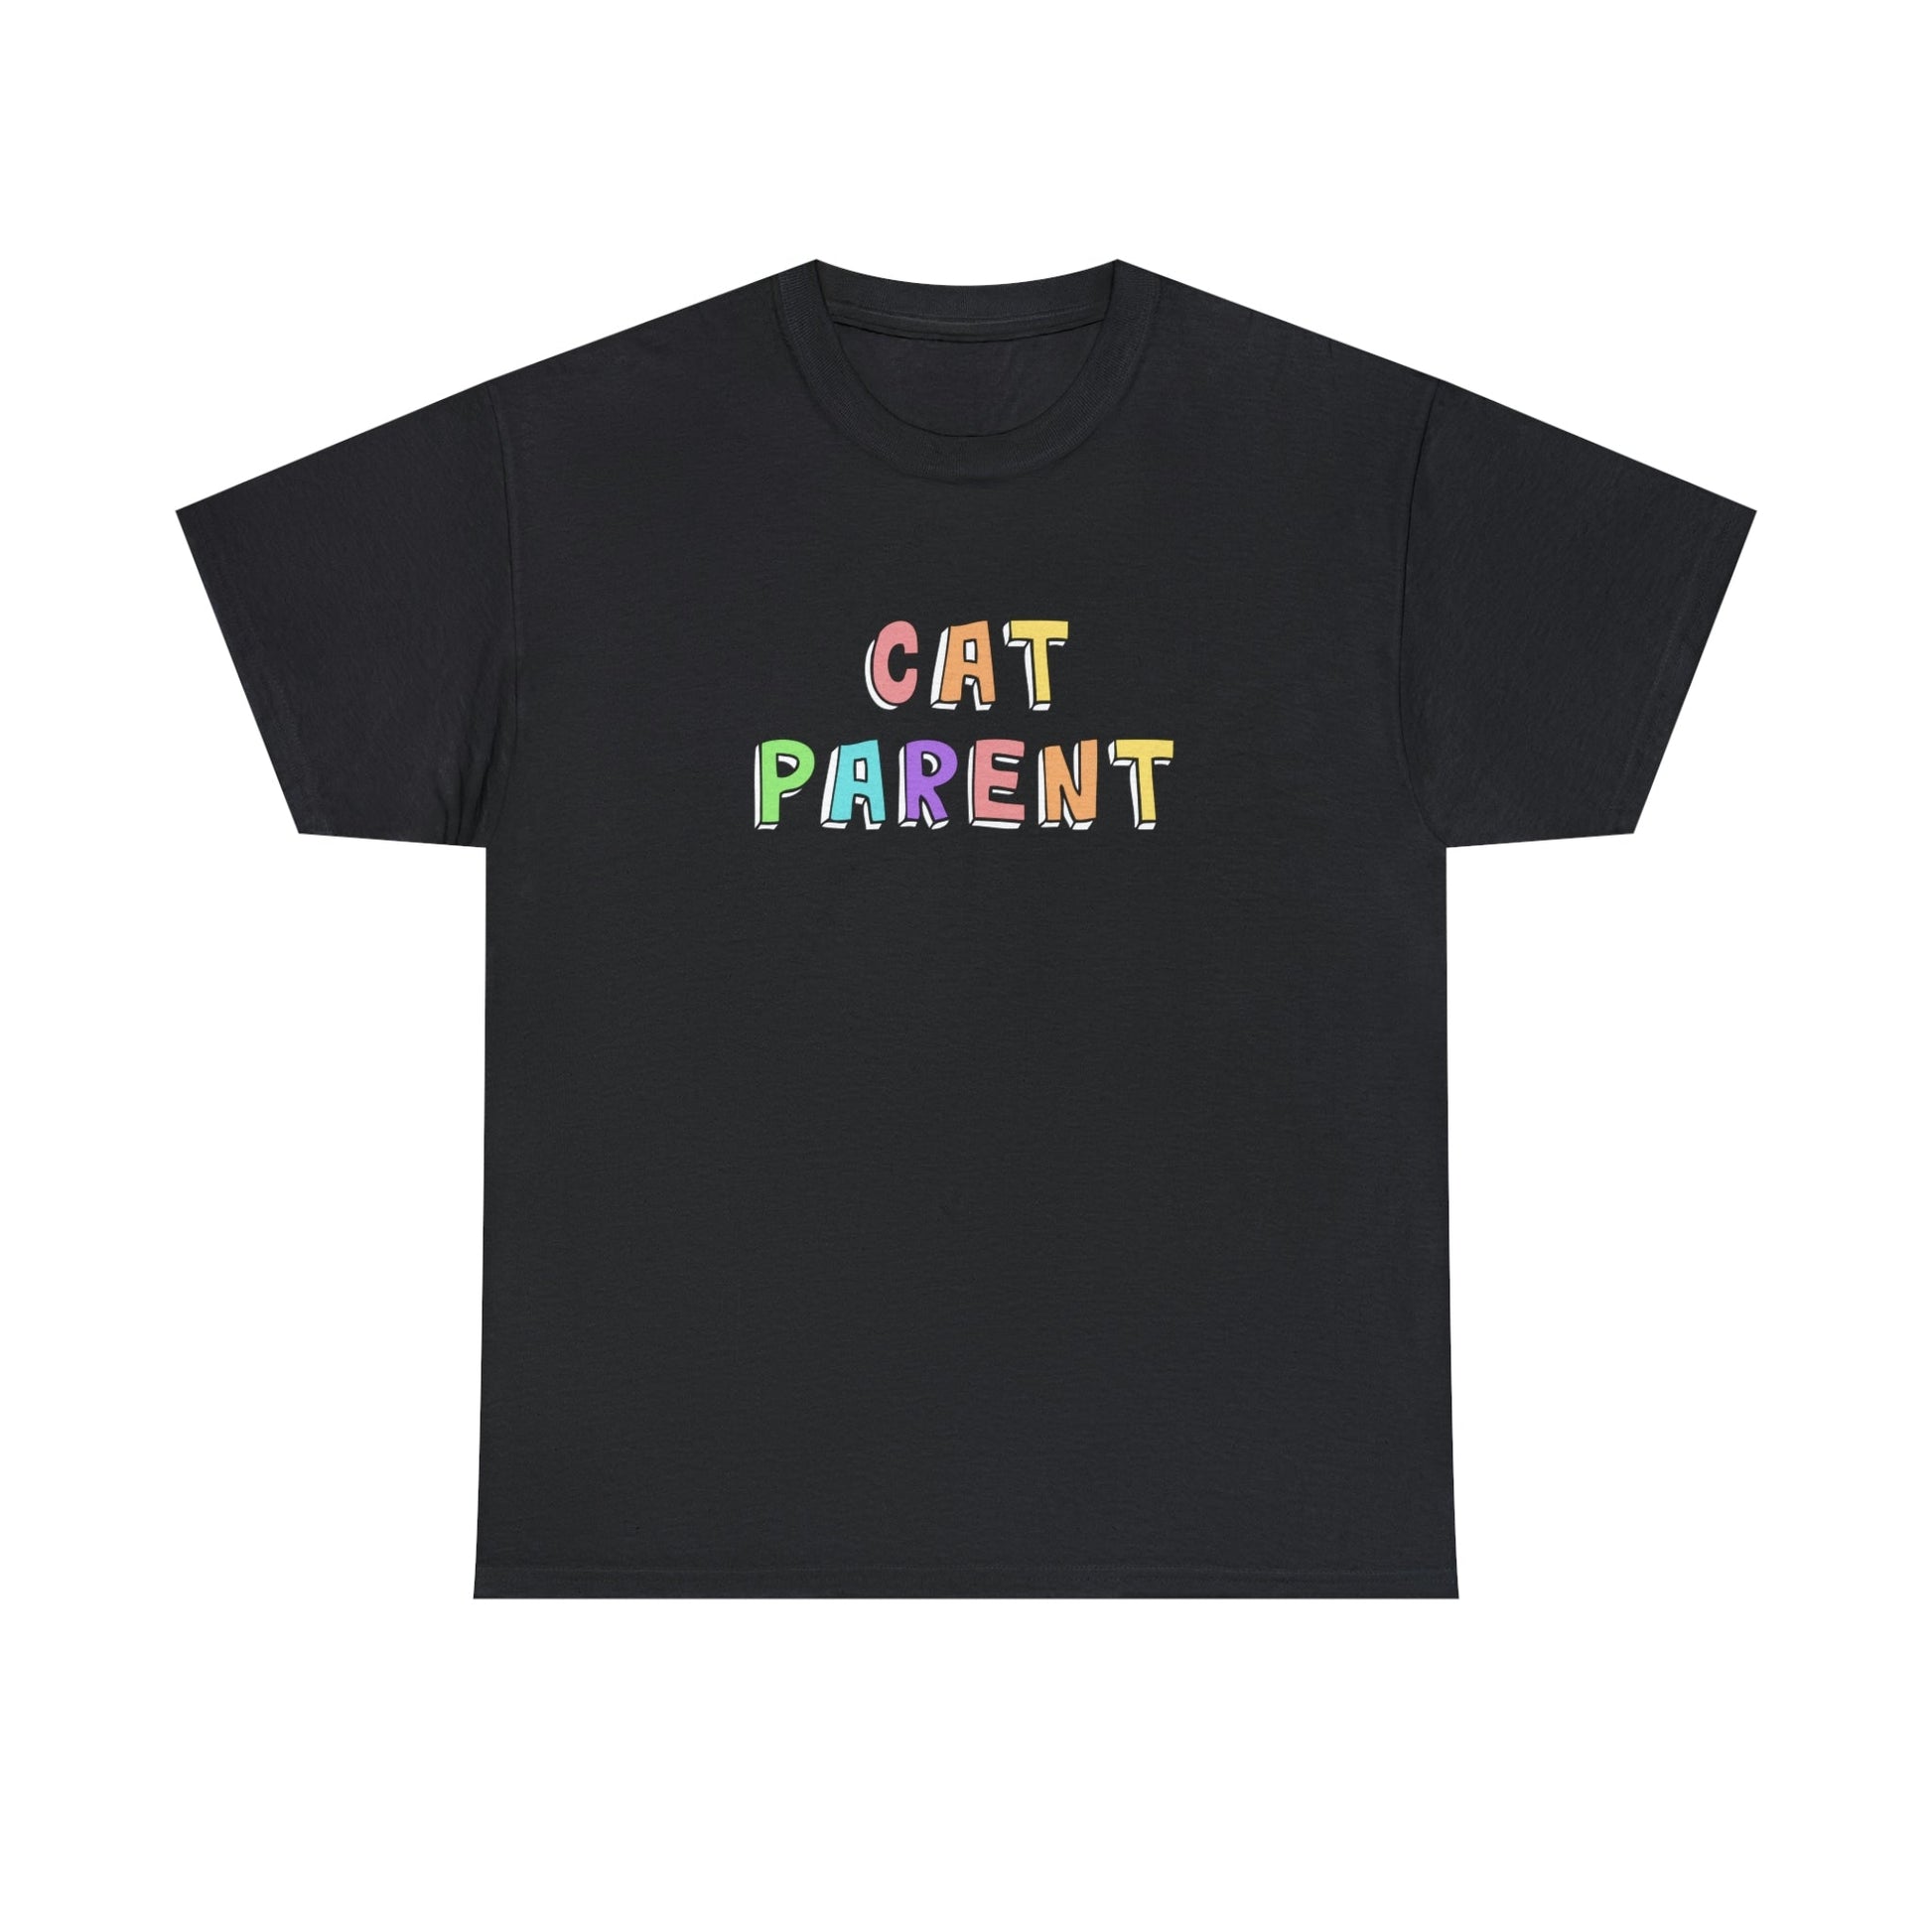 Cat Parent | Text Tees - Detezi Designs-71209171706561498445